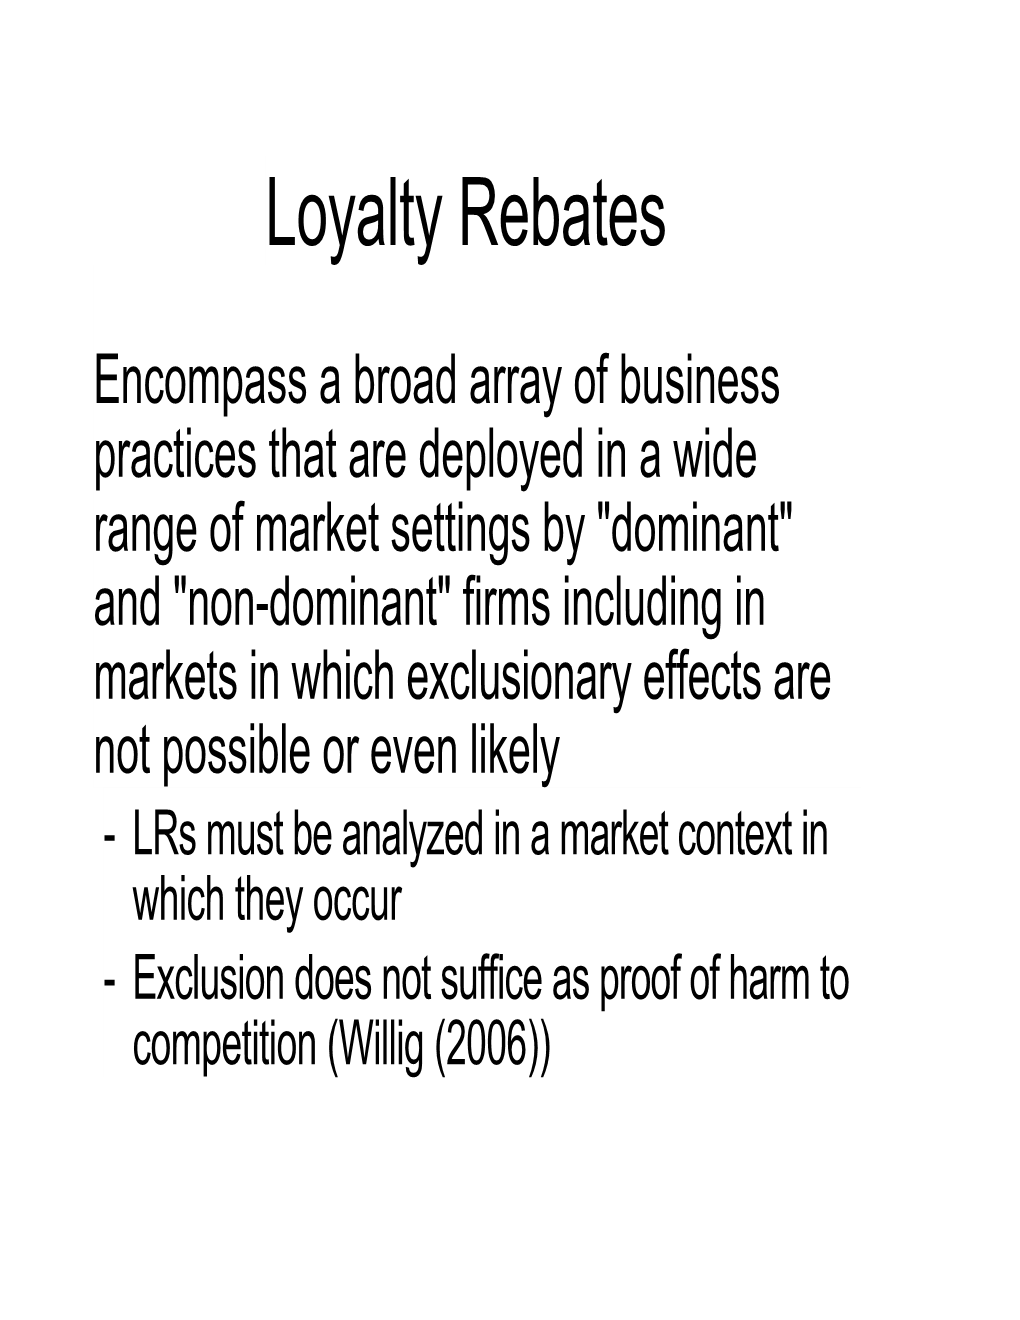 Economics of Loyalty Rebates: Where Are We Now